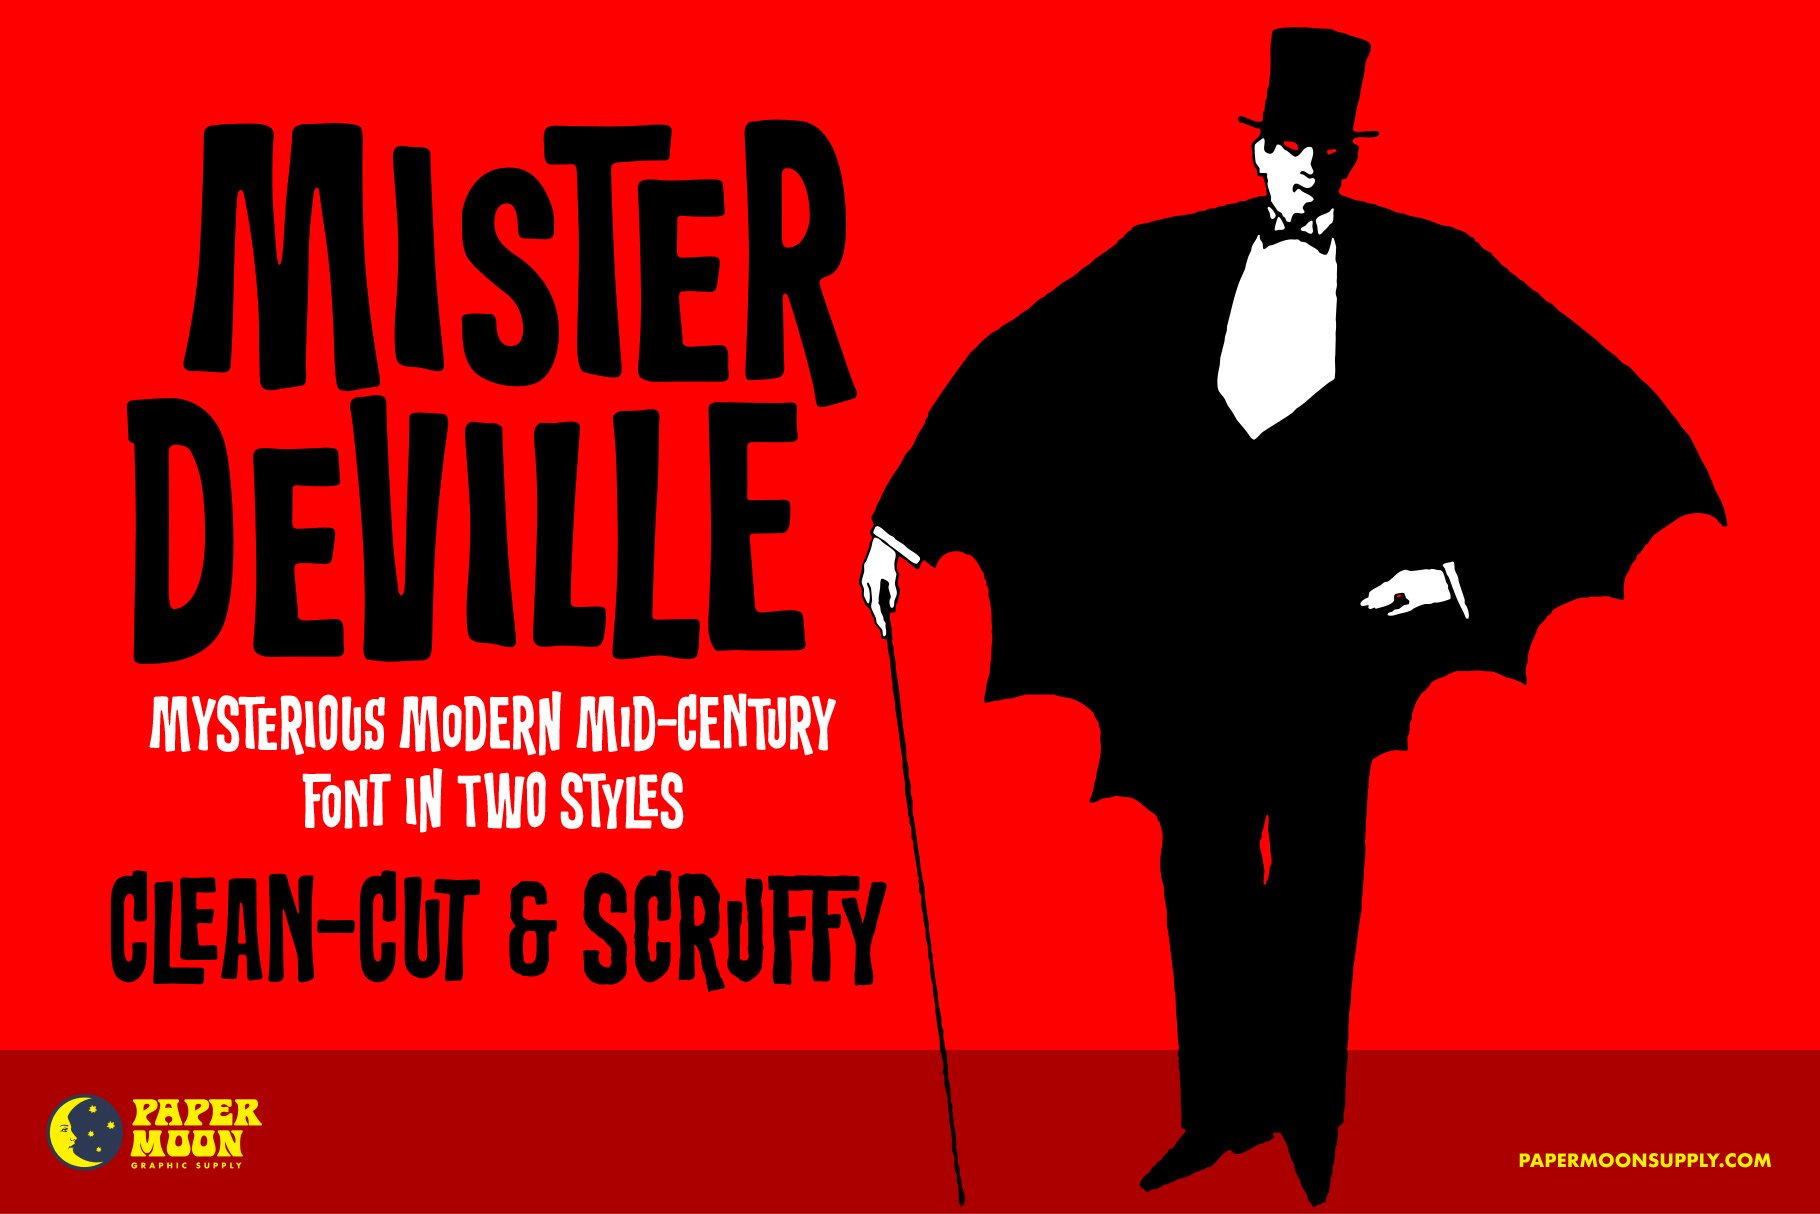 PM Mister DeVille Midcentury Font cover image.